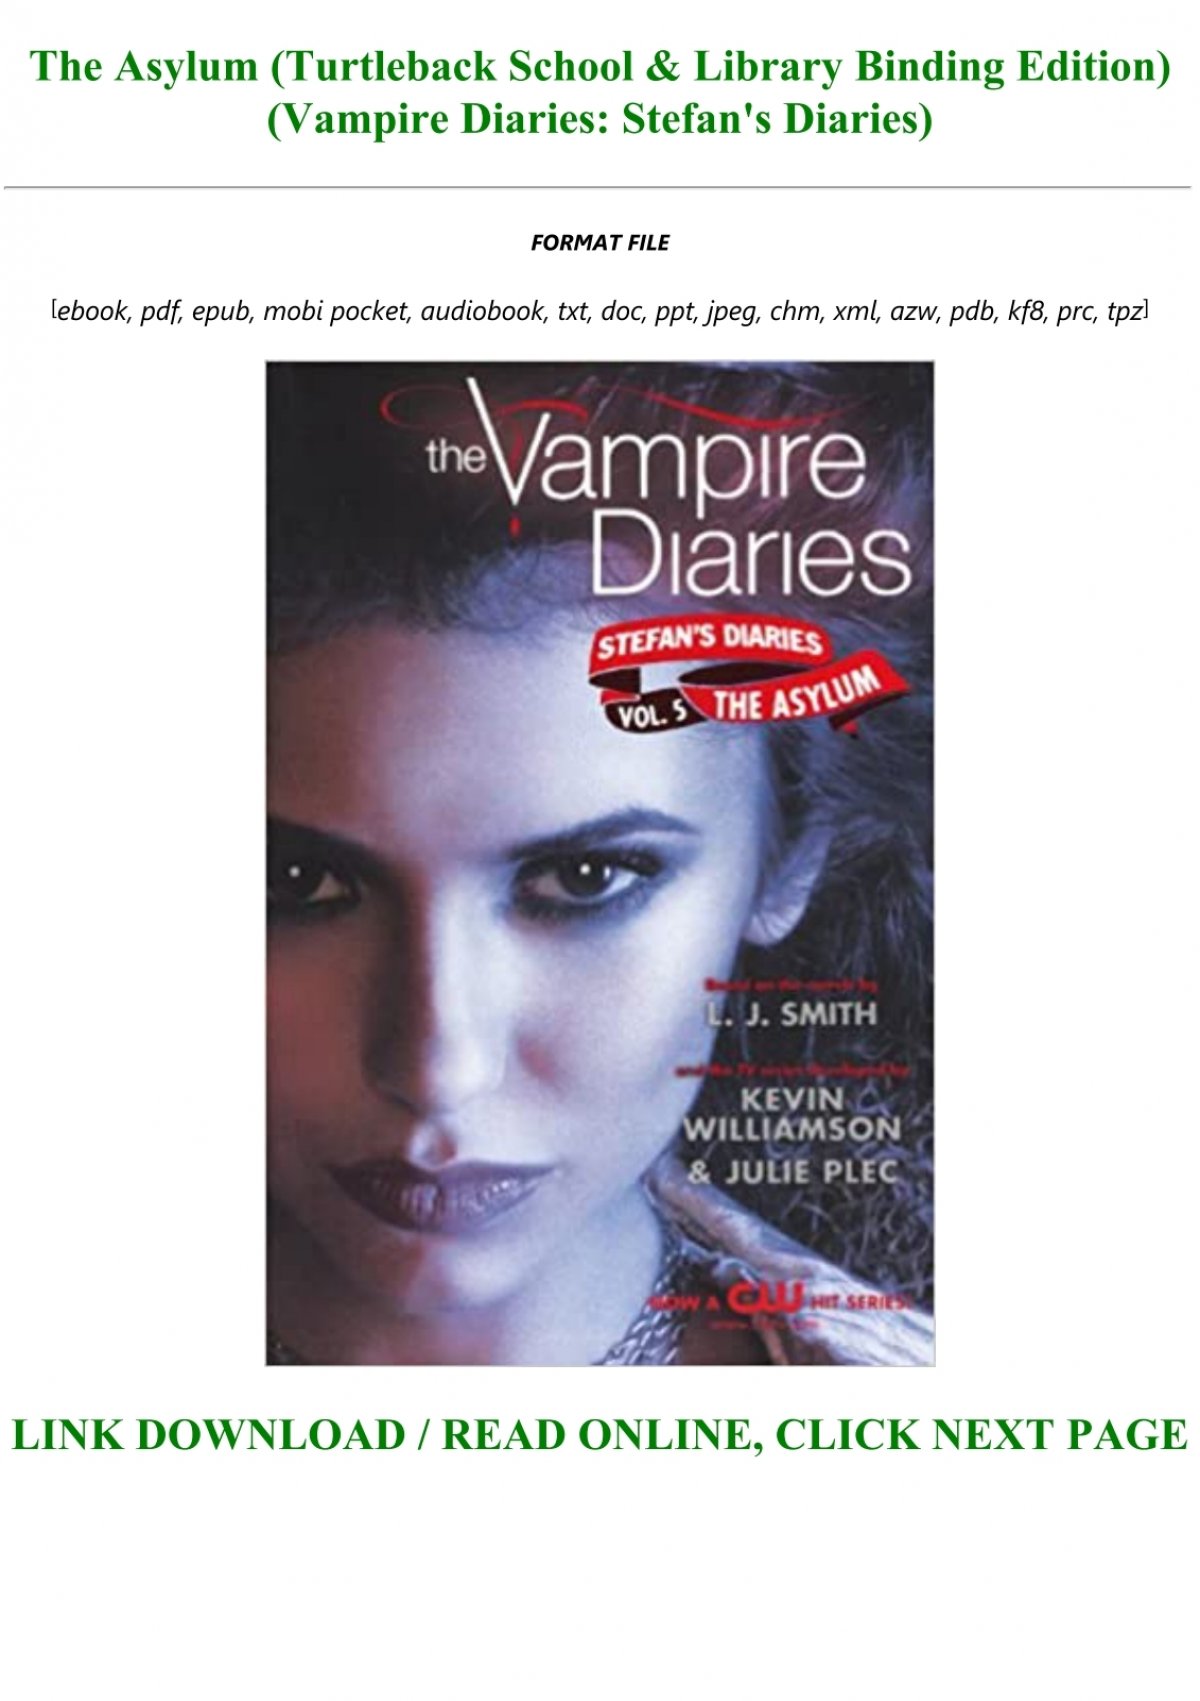 Download The Asylum Turtleback School Library Binding Edition Vampire Diaries Stefan S Diaries Txt Pdf Epub